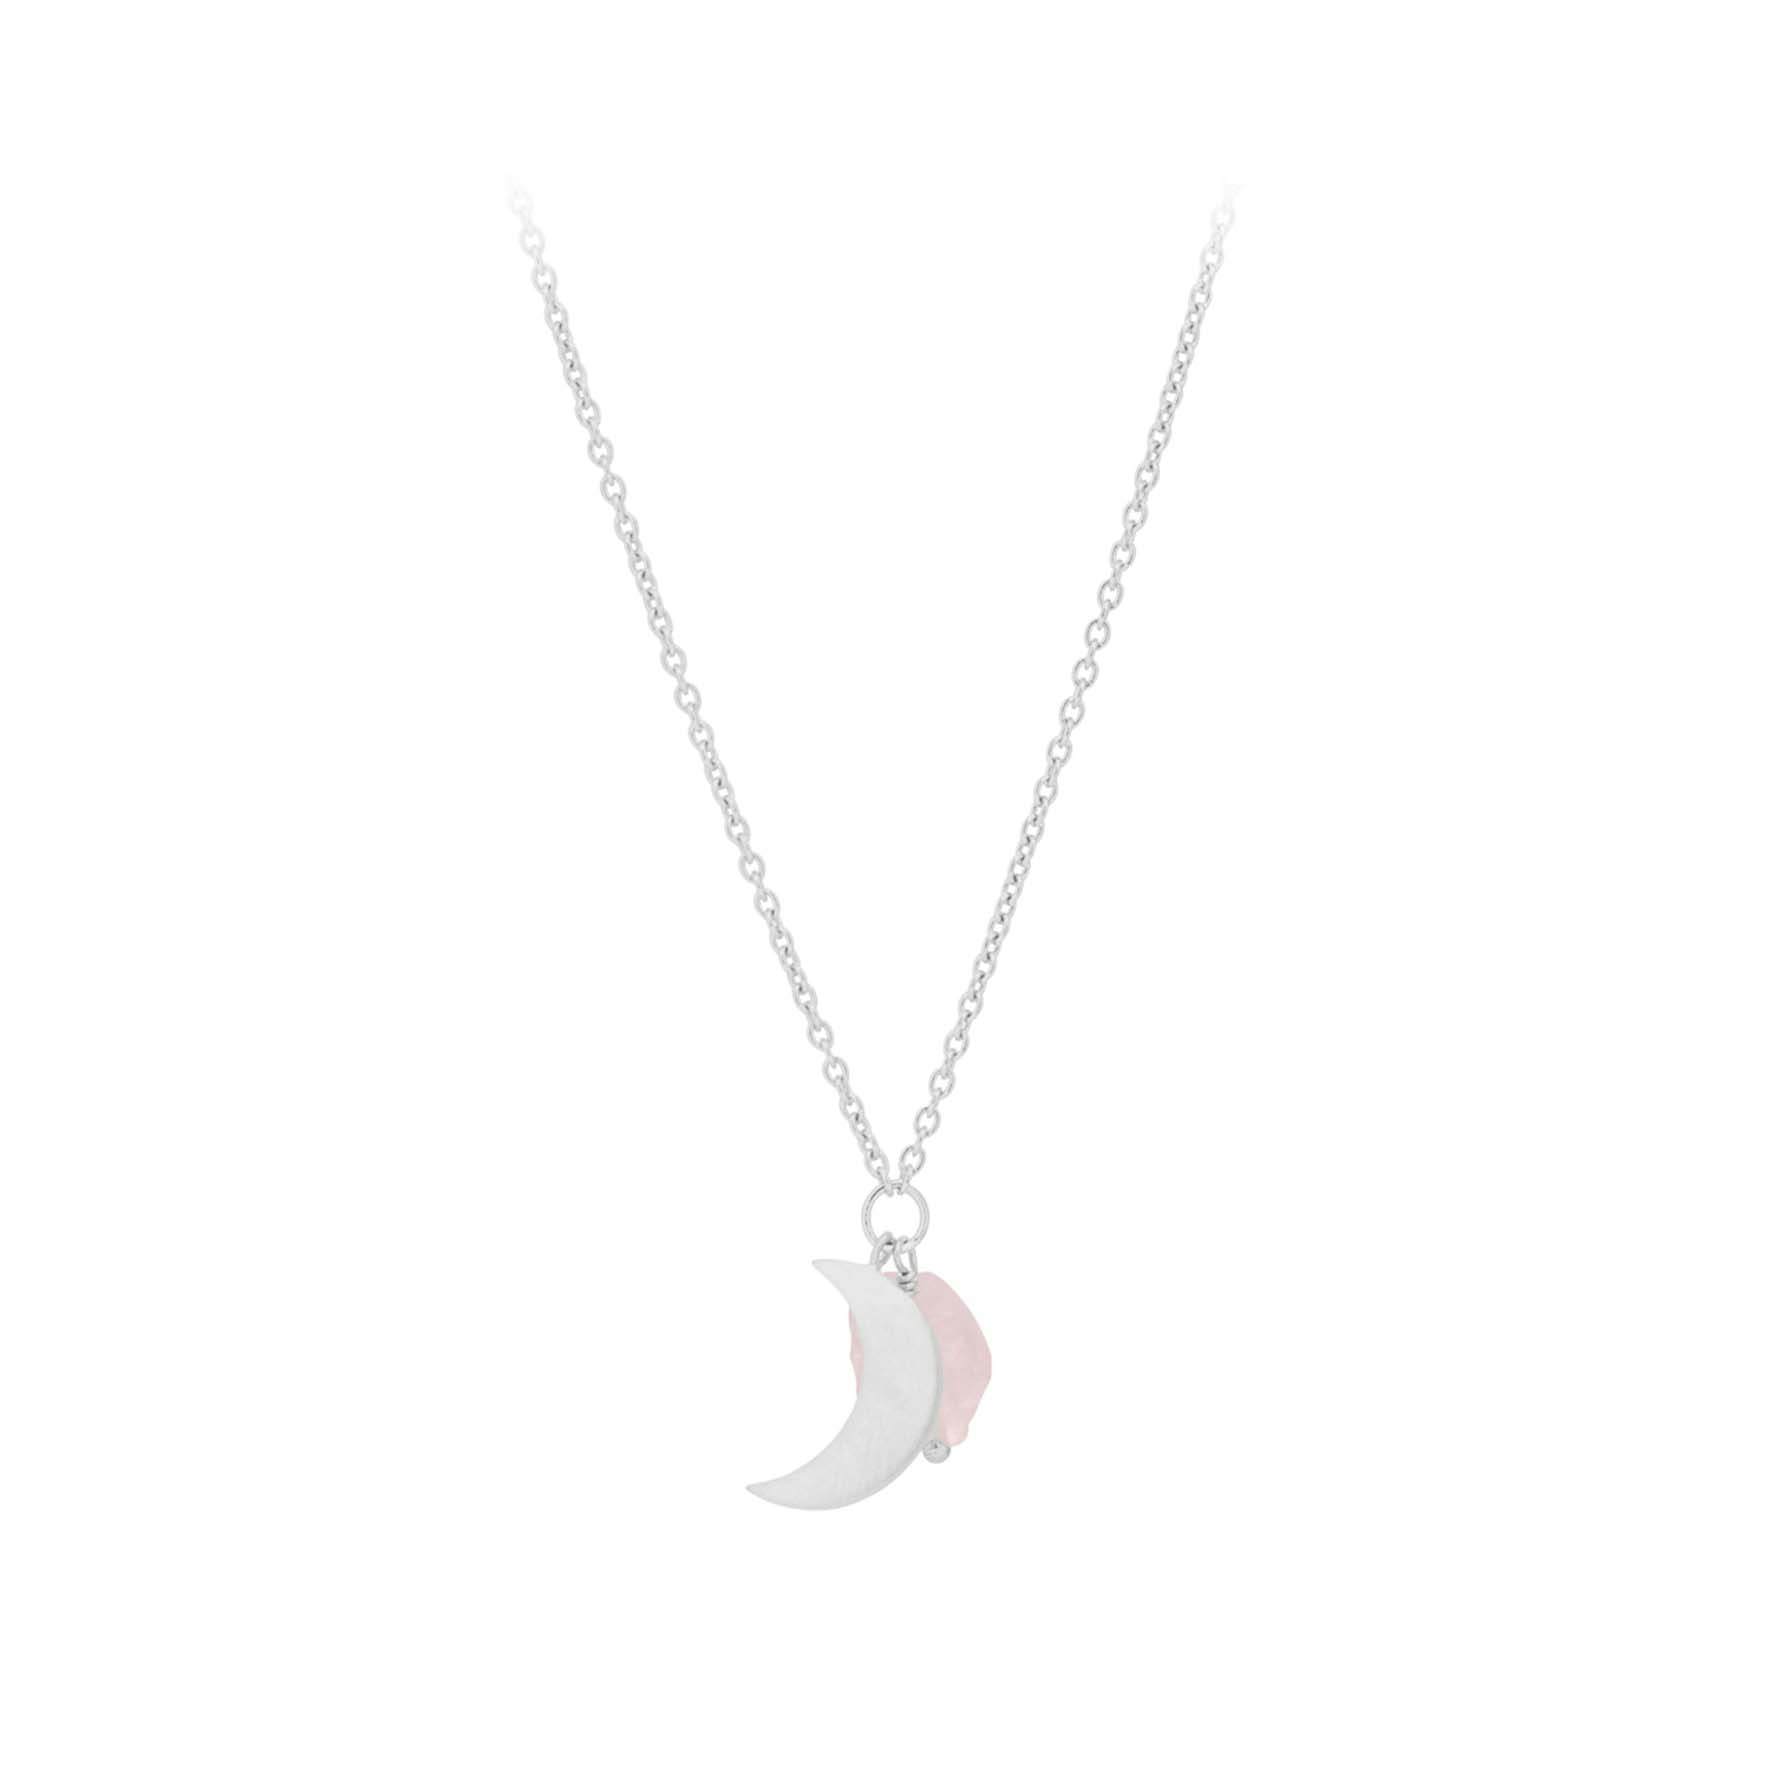 Lunar Orb Necklace von Pernille Corydon in Silber Sterling 925